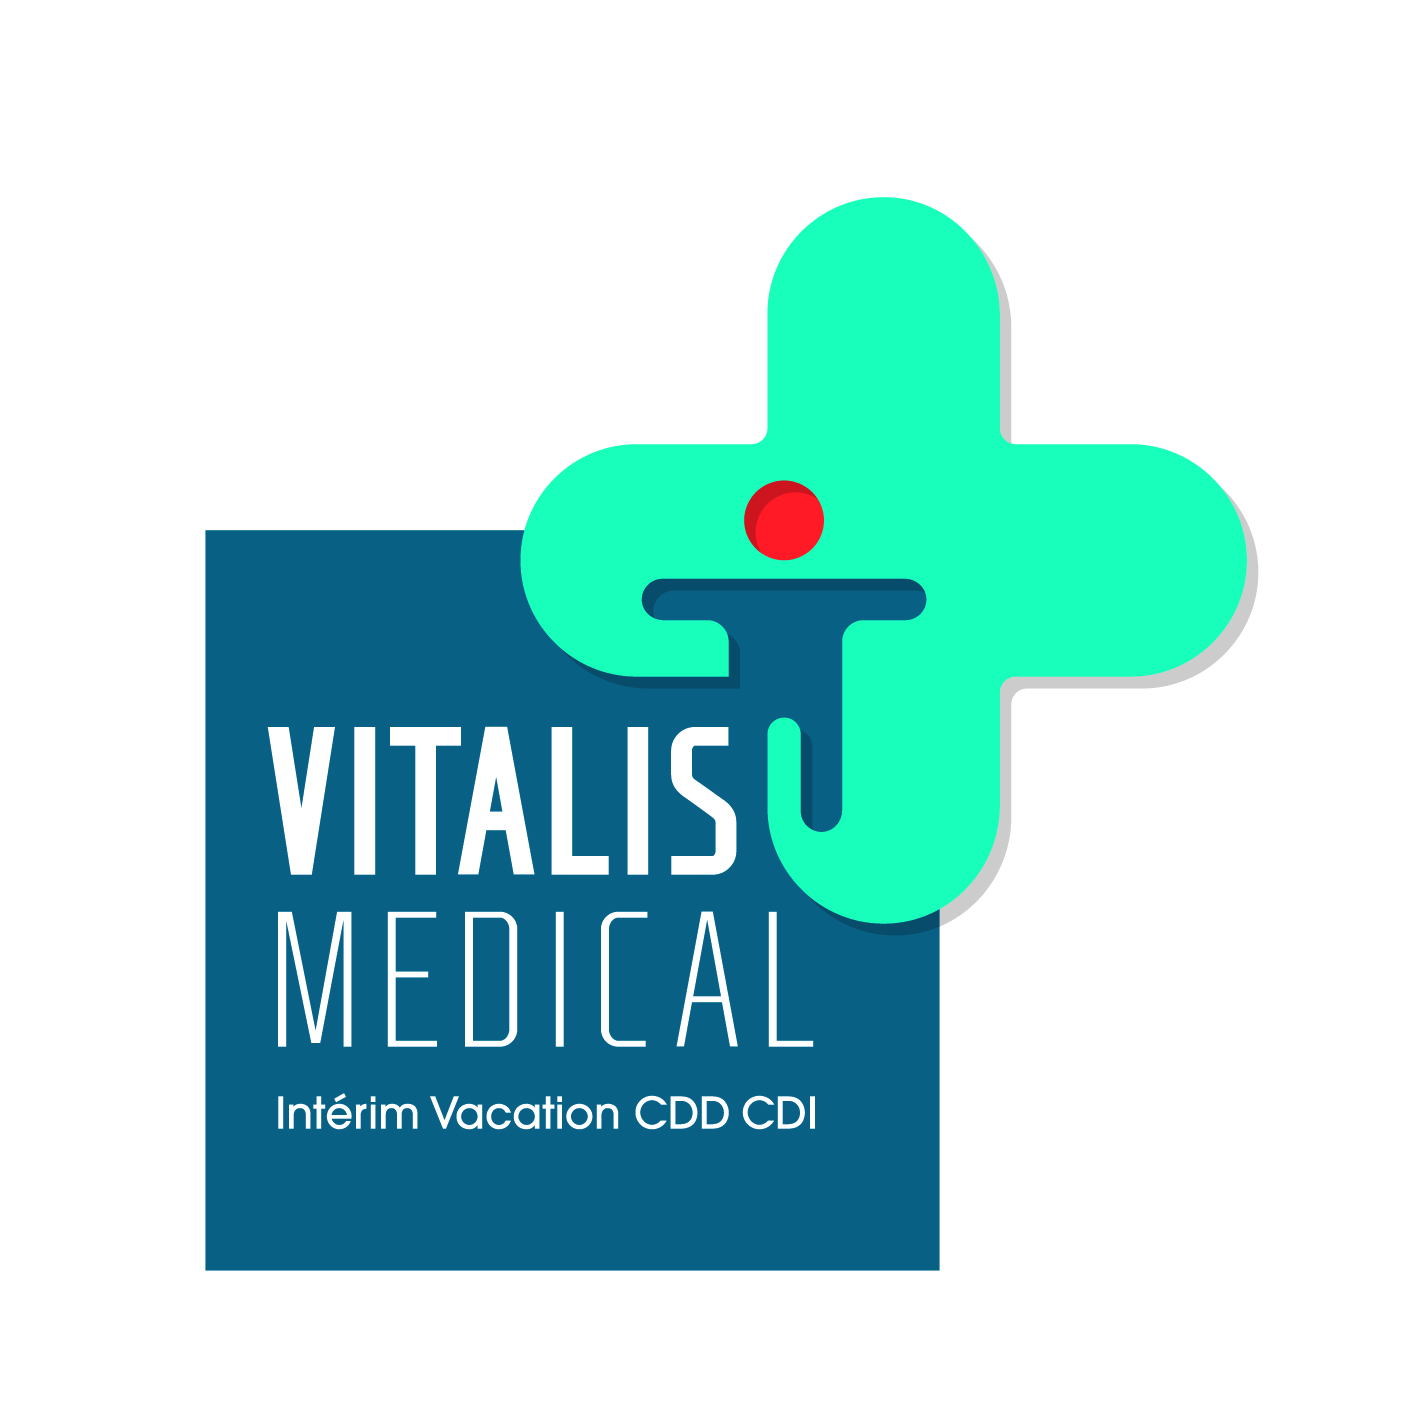 VITALIS MEDICAL - intérim, vacation, CDD et CDI